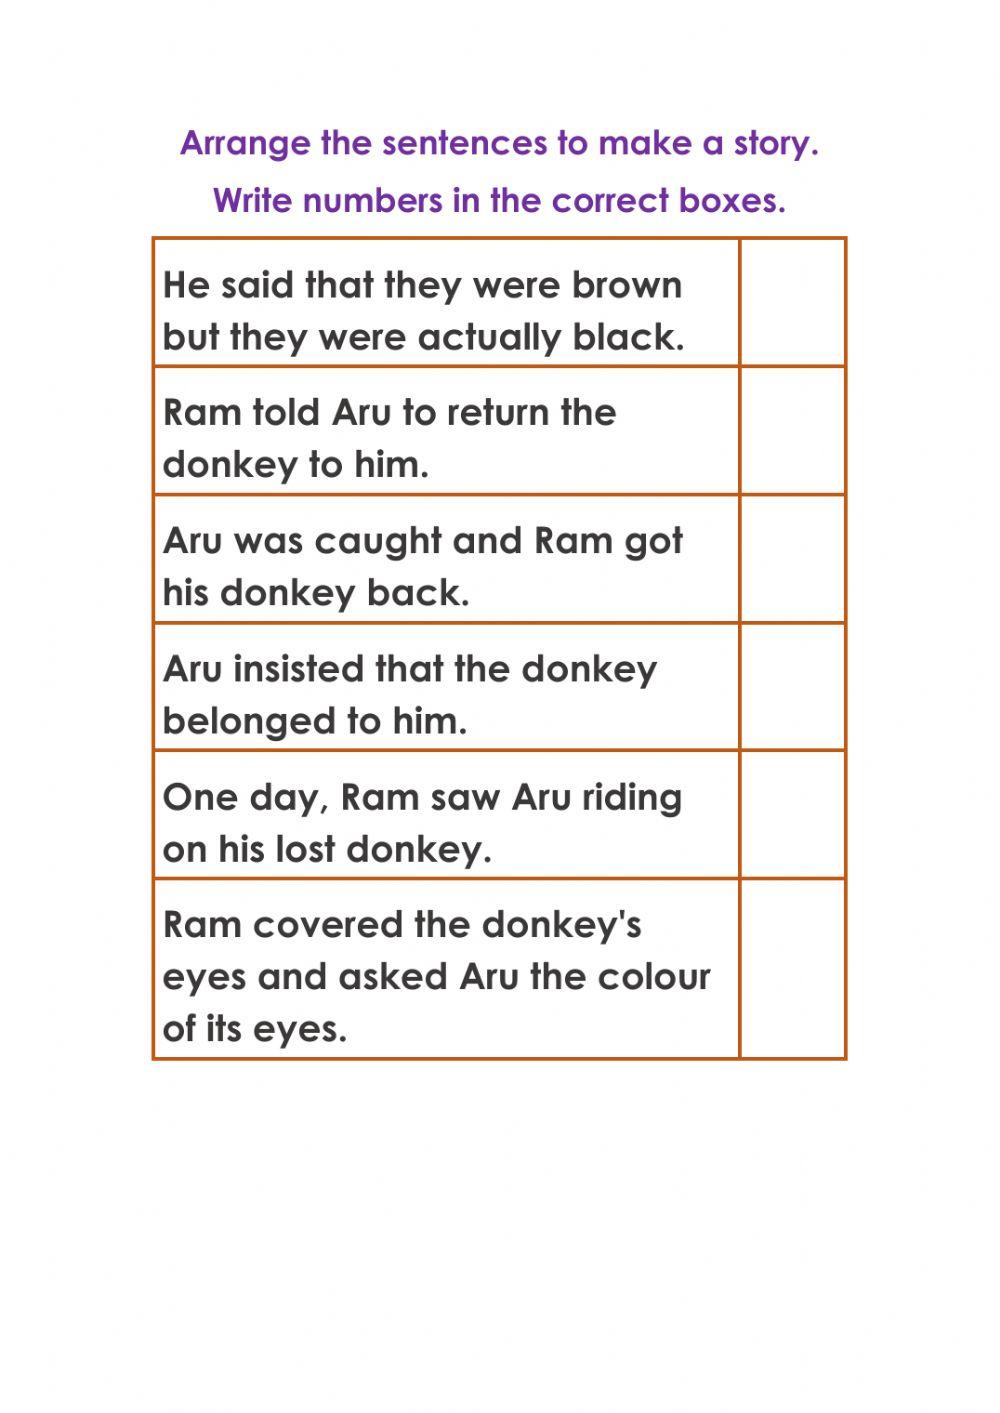 Arrange sentences in correct order